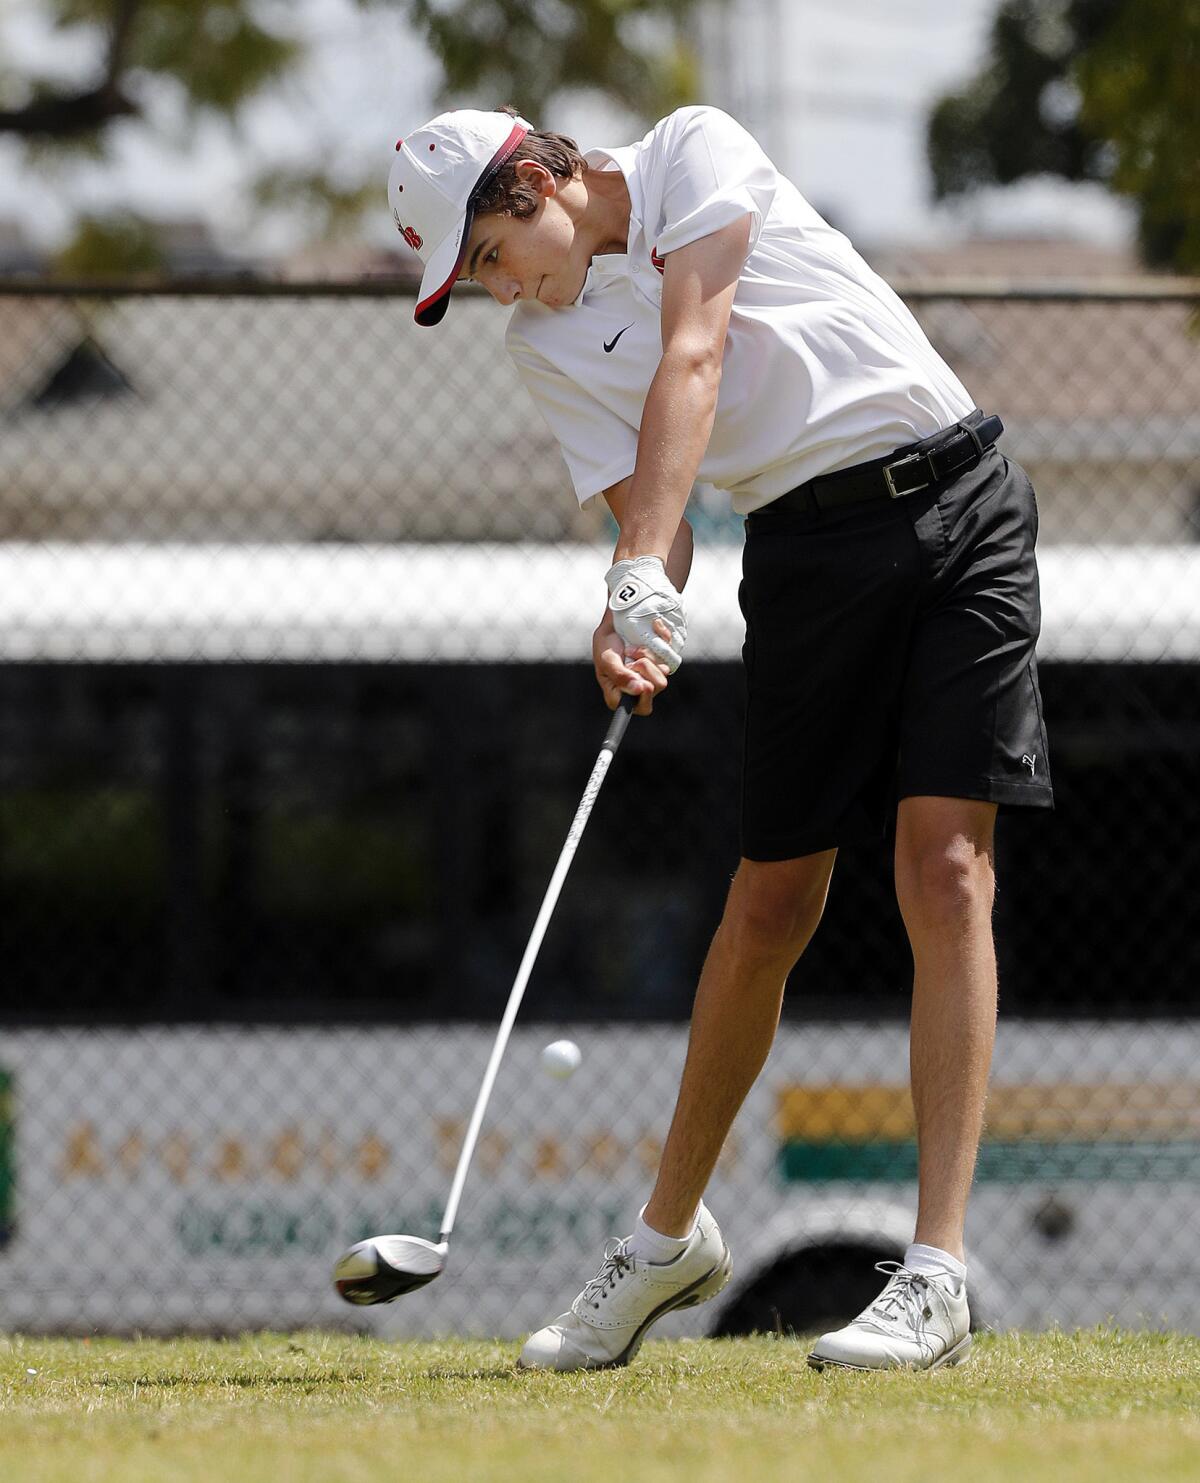 Lincoln Melcher is a key returner this season for the Burroughs High boys' golf team.